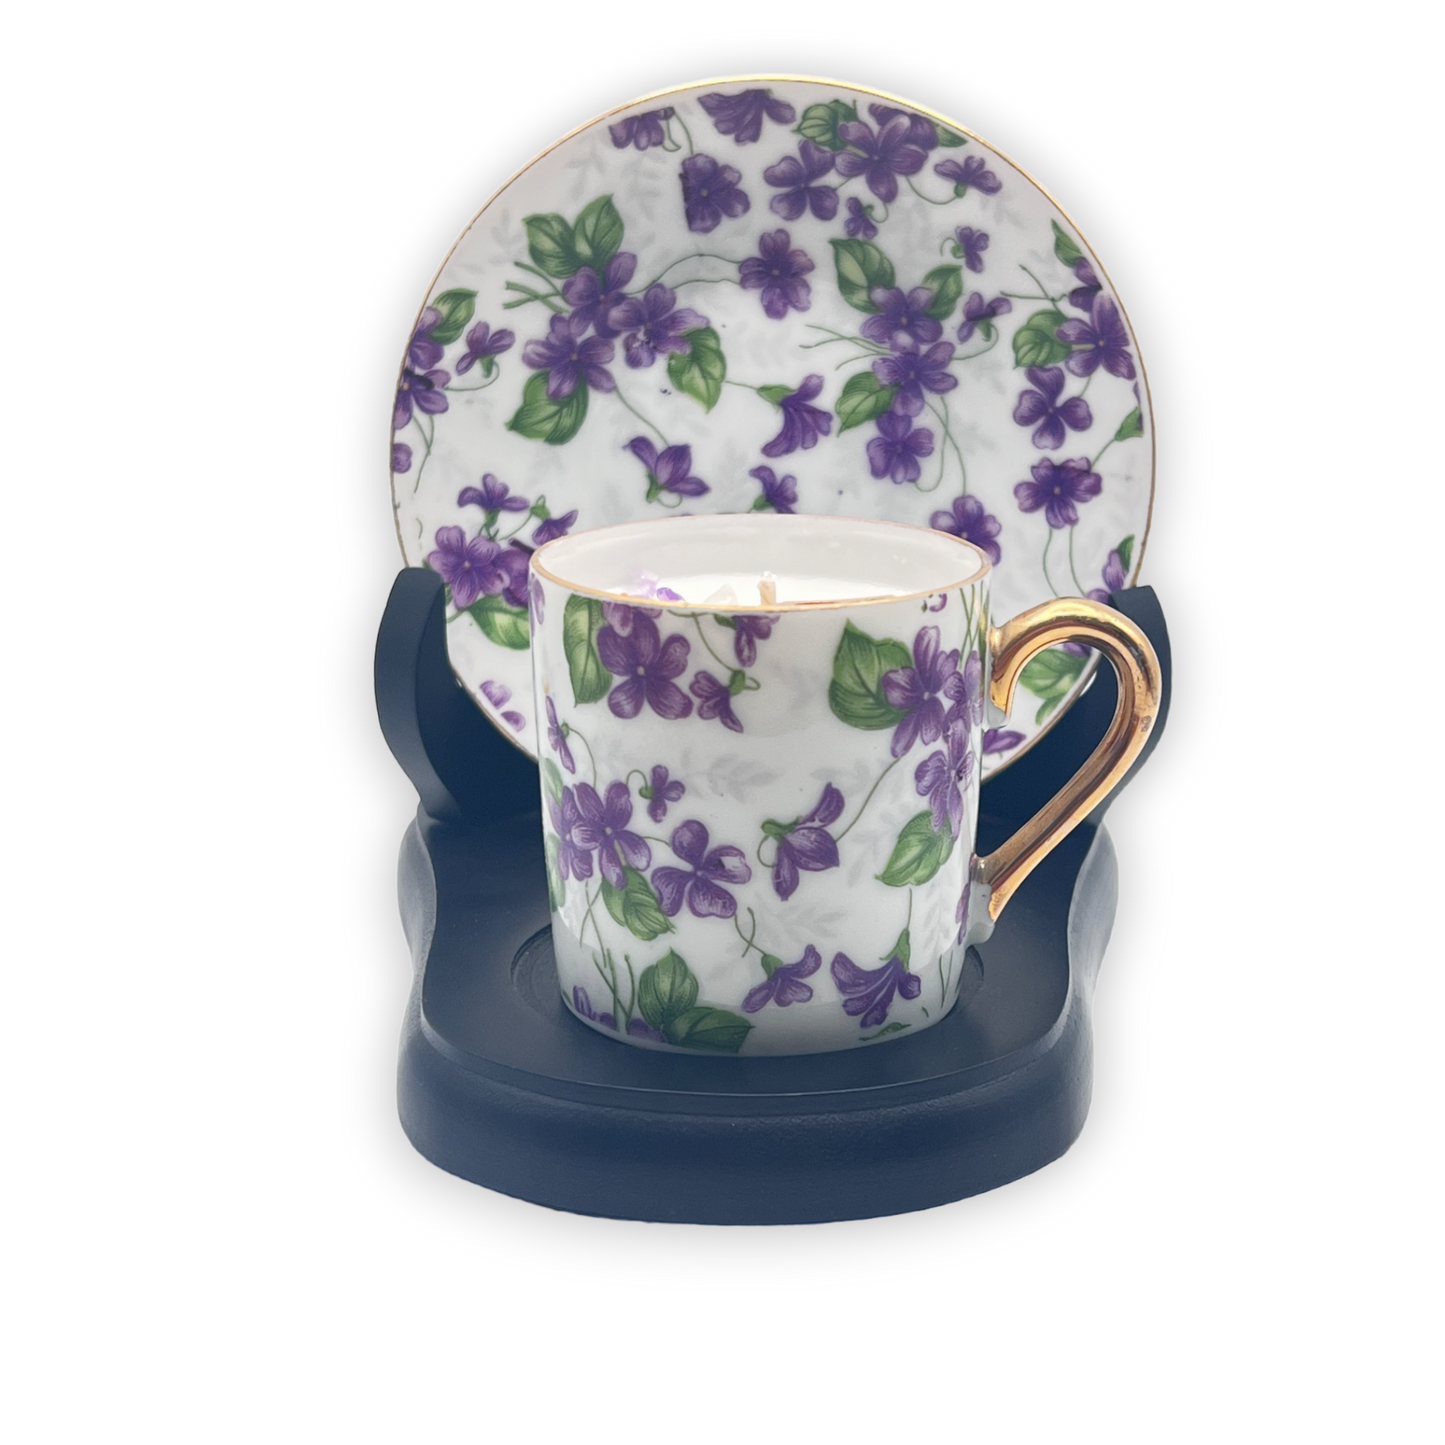 British Paragon Vintage Teacup Candle